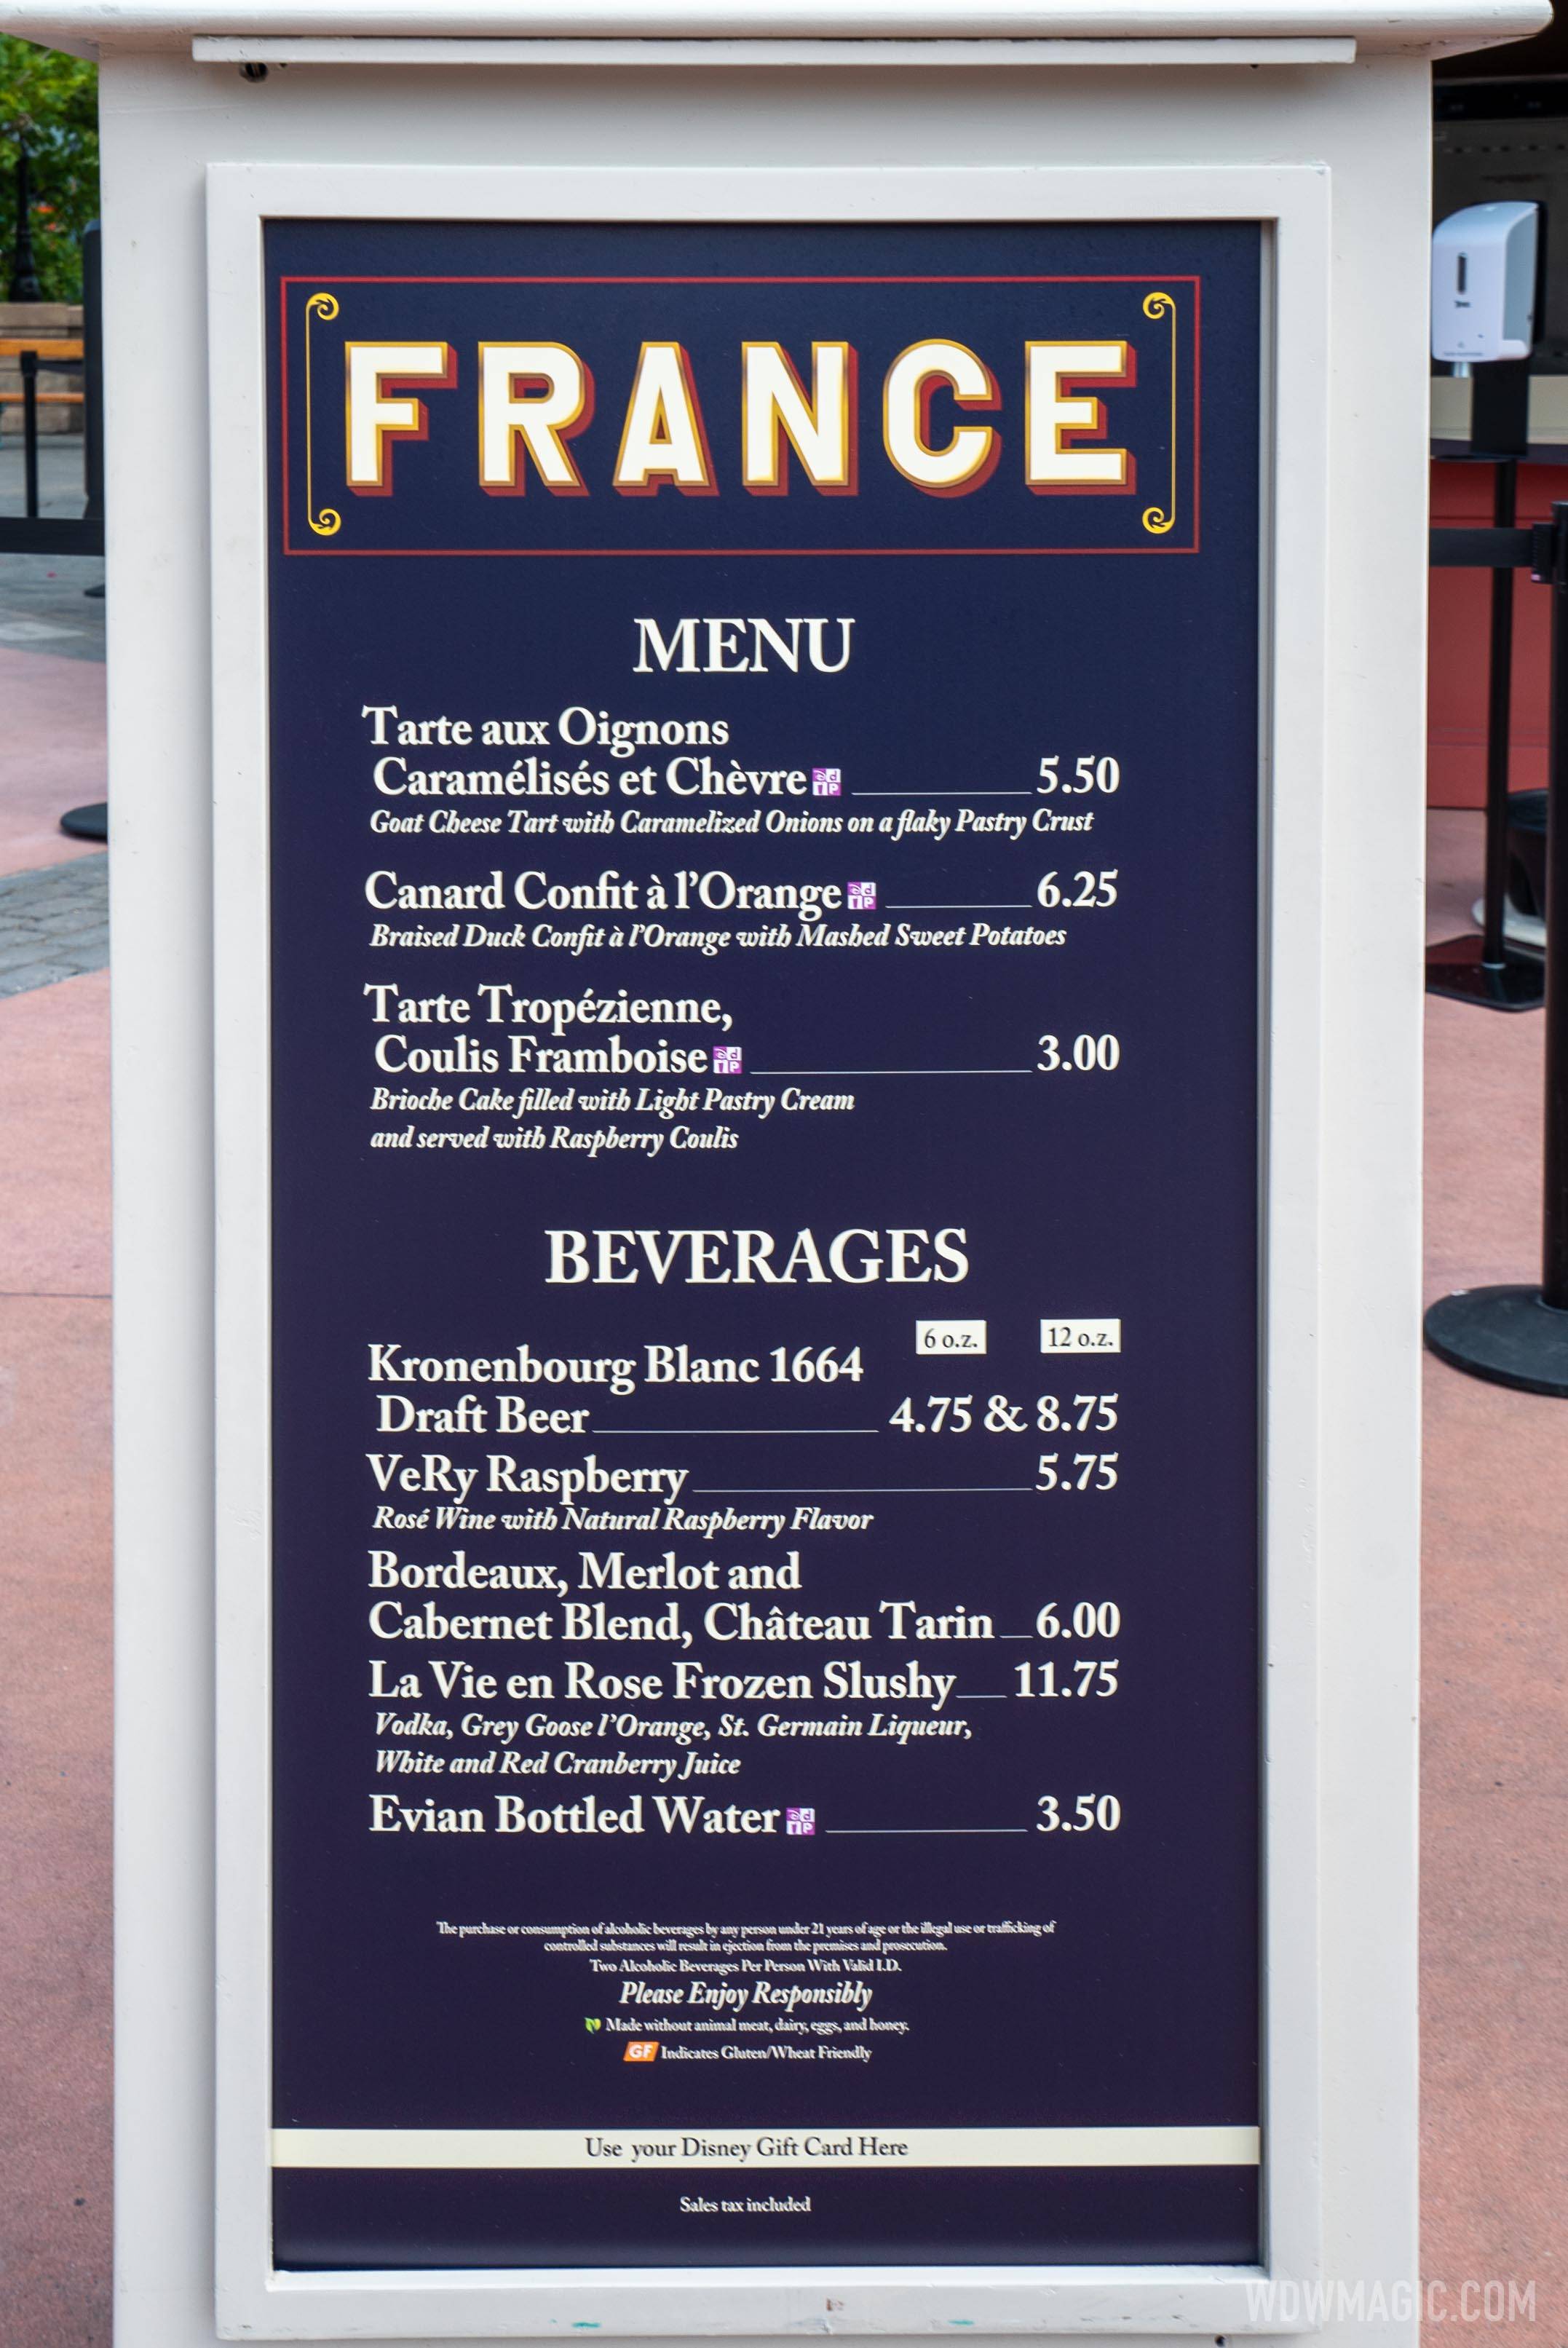 Taste of EPCOT Food and Wine Festival - France menu